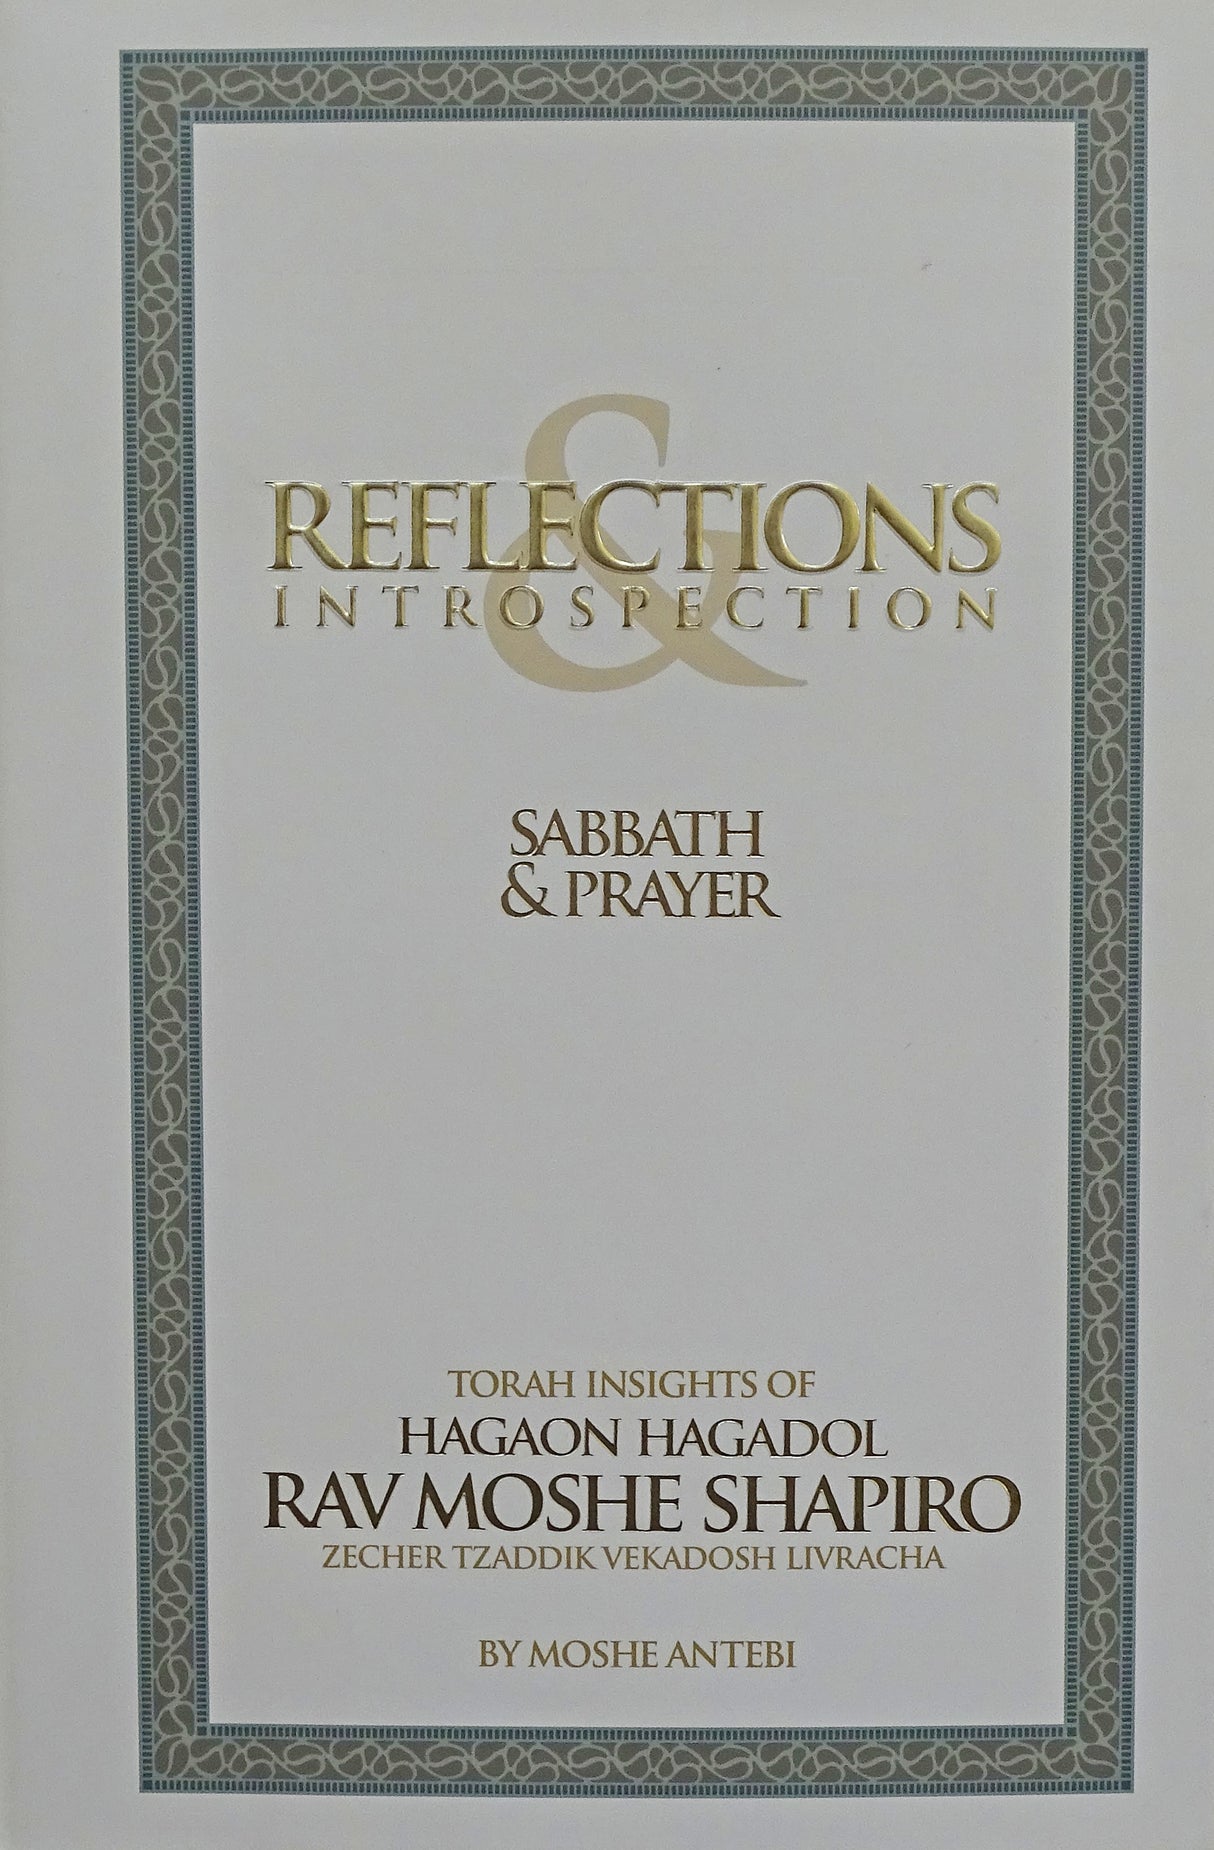 Reflections & Introspection Sabbath & Prayer